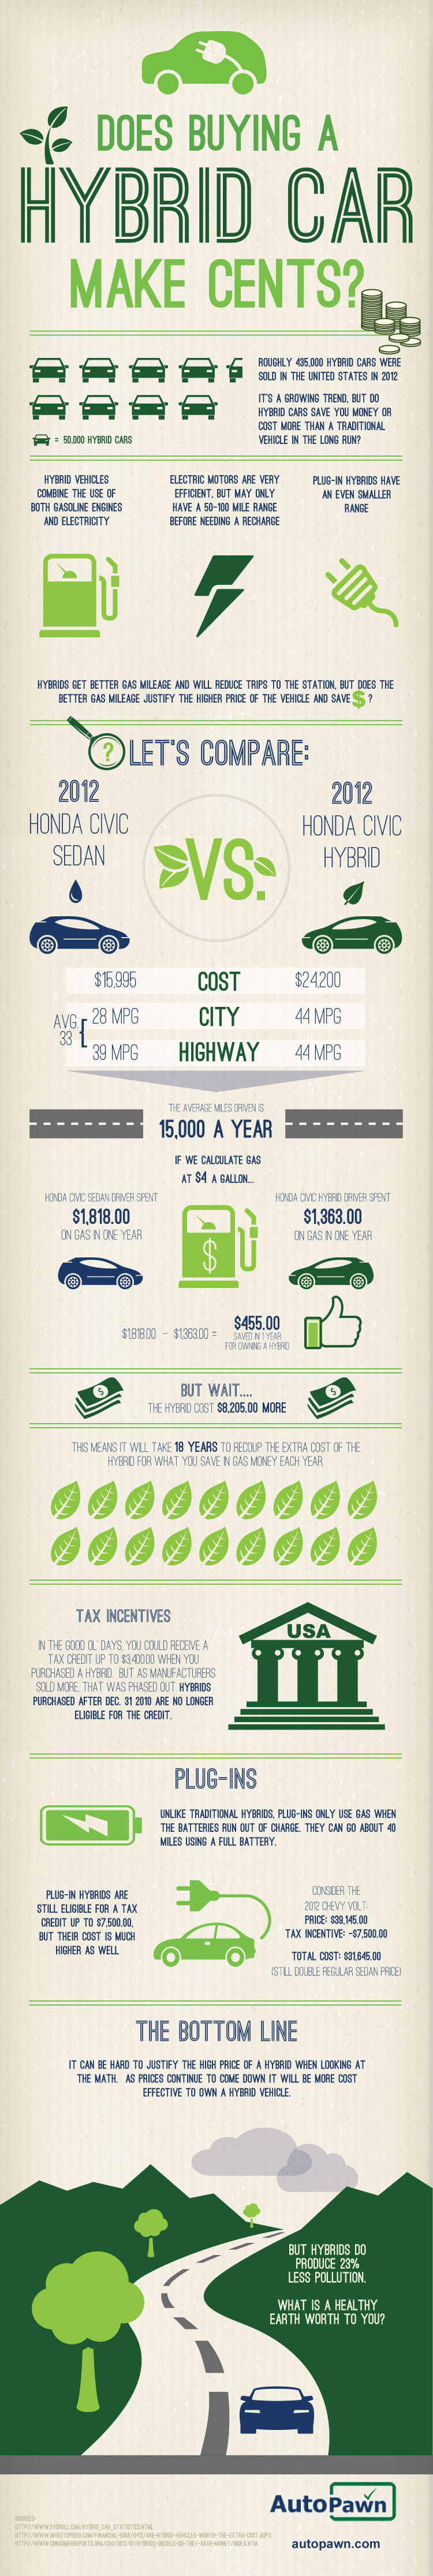 Does buying a hybrid car make sense infographic